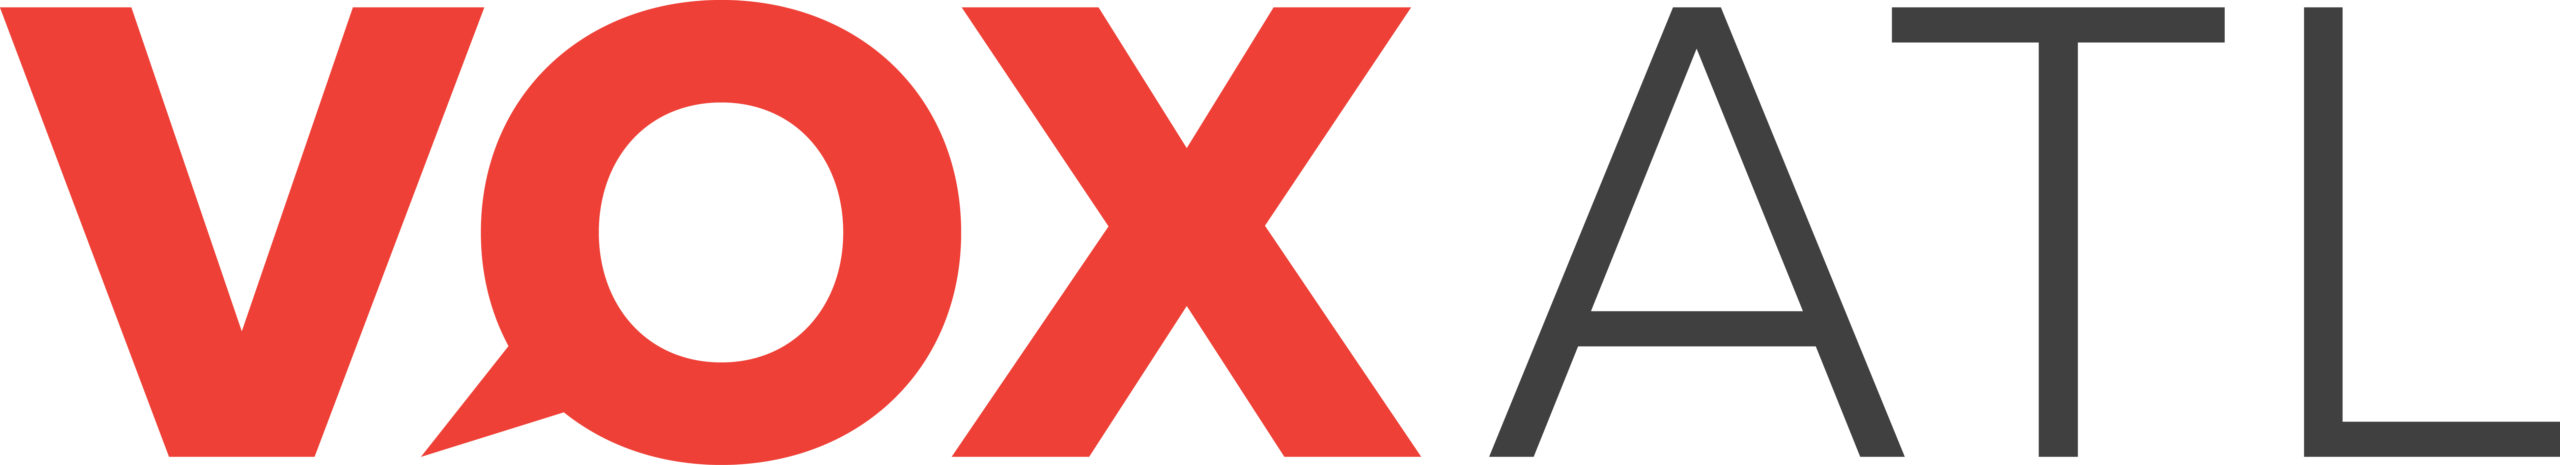 logo-VOX-redblack